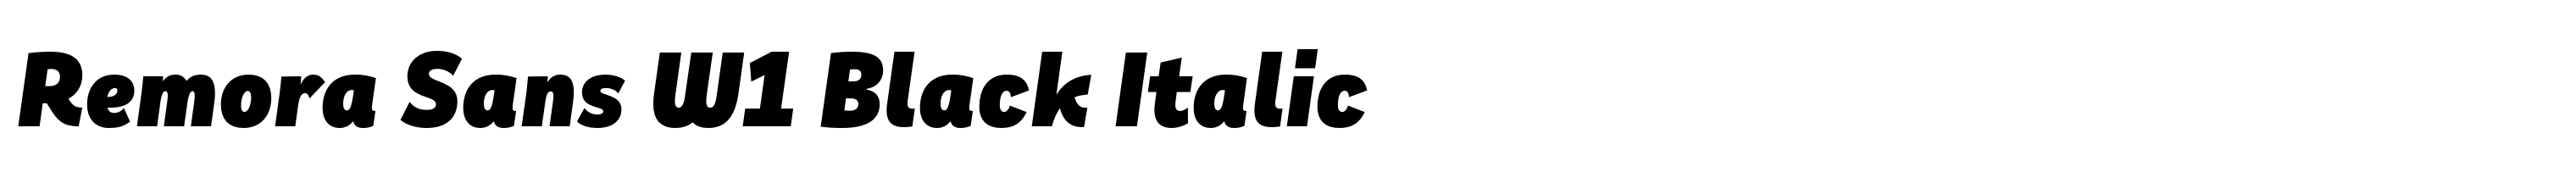 Remora Sans W1 Black Italic